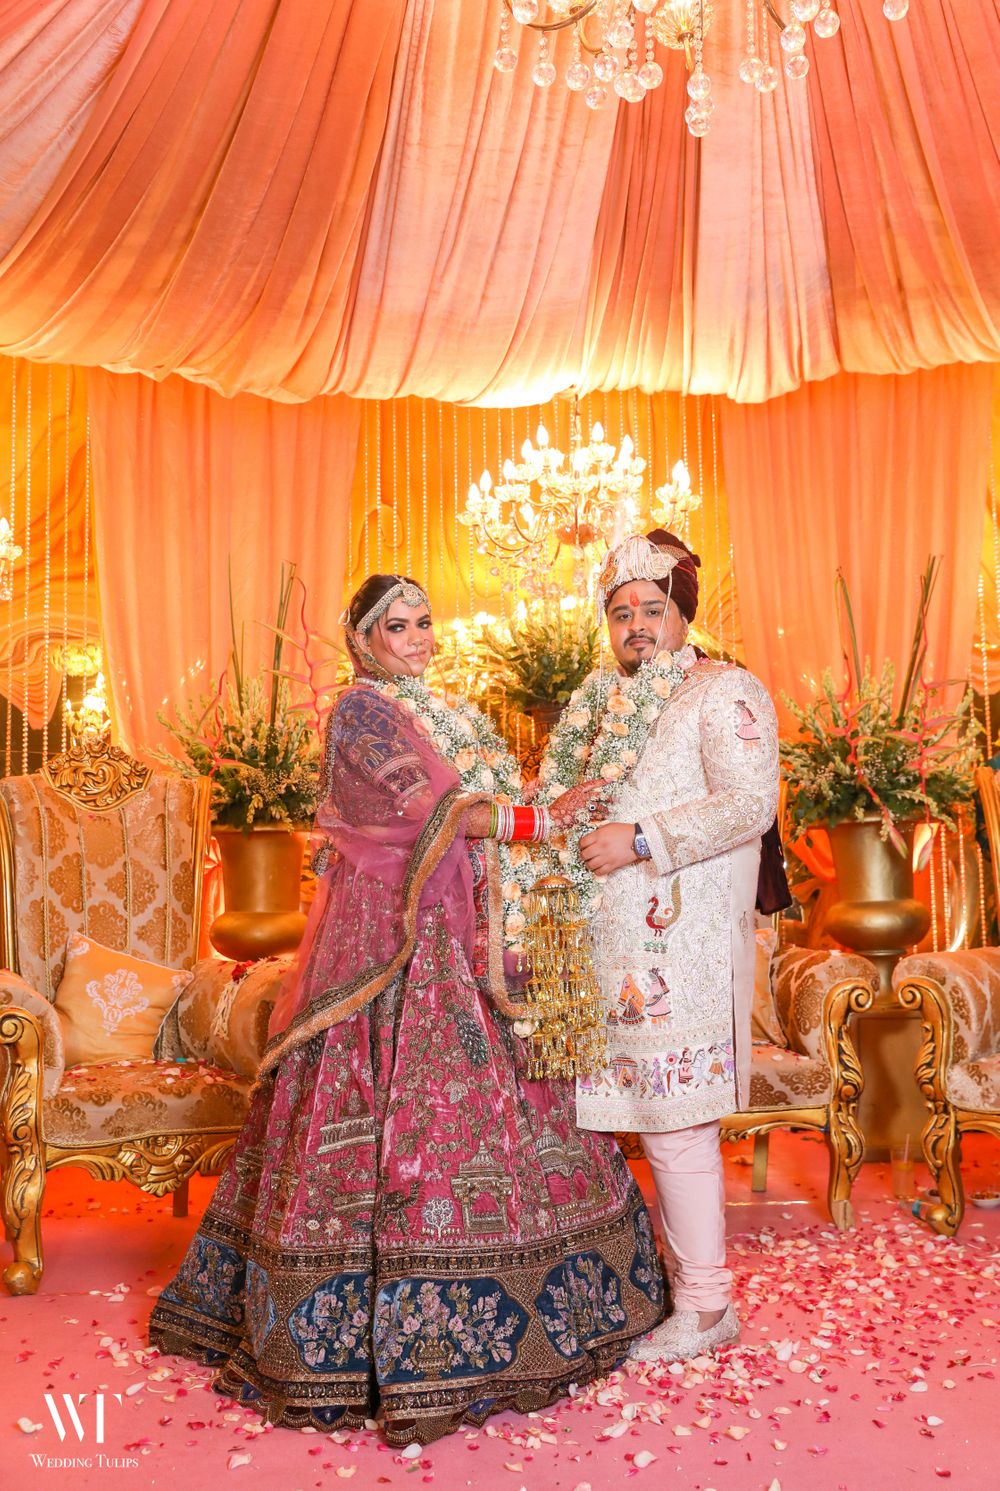 Photo From Arjun & Meenu - By Wedding Tulips